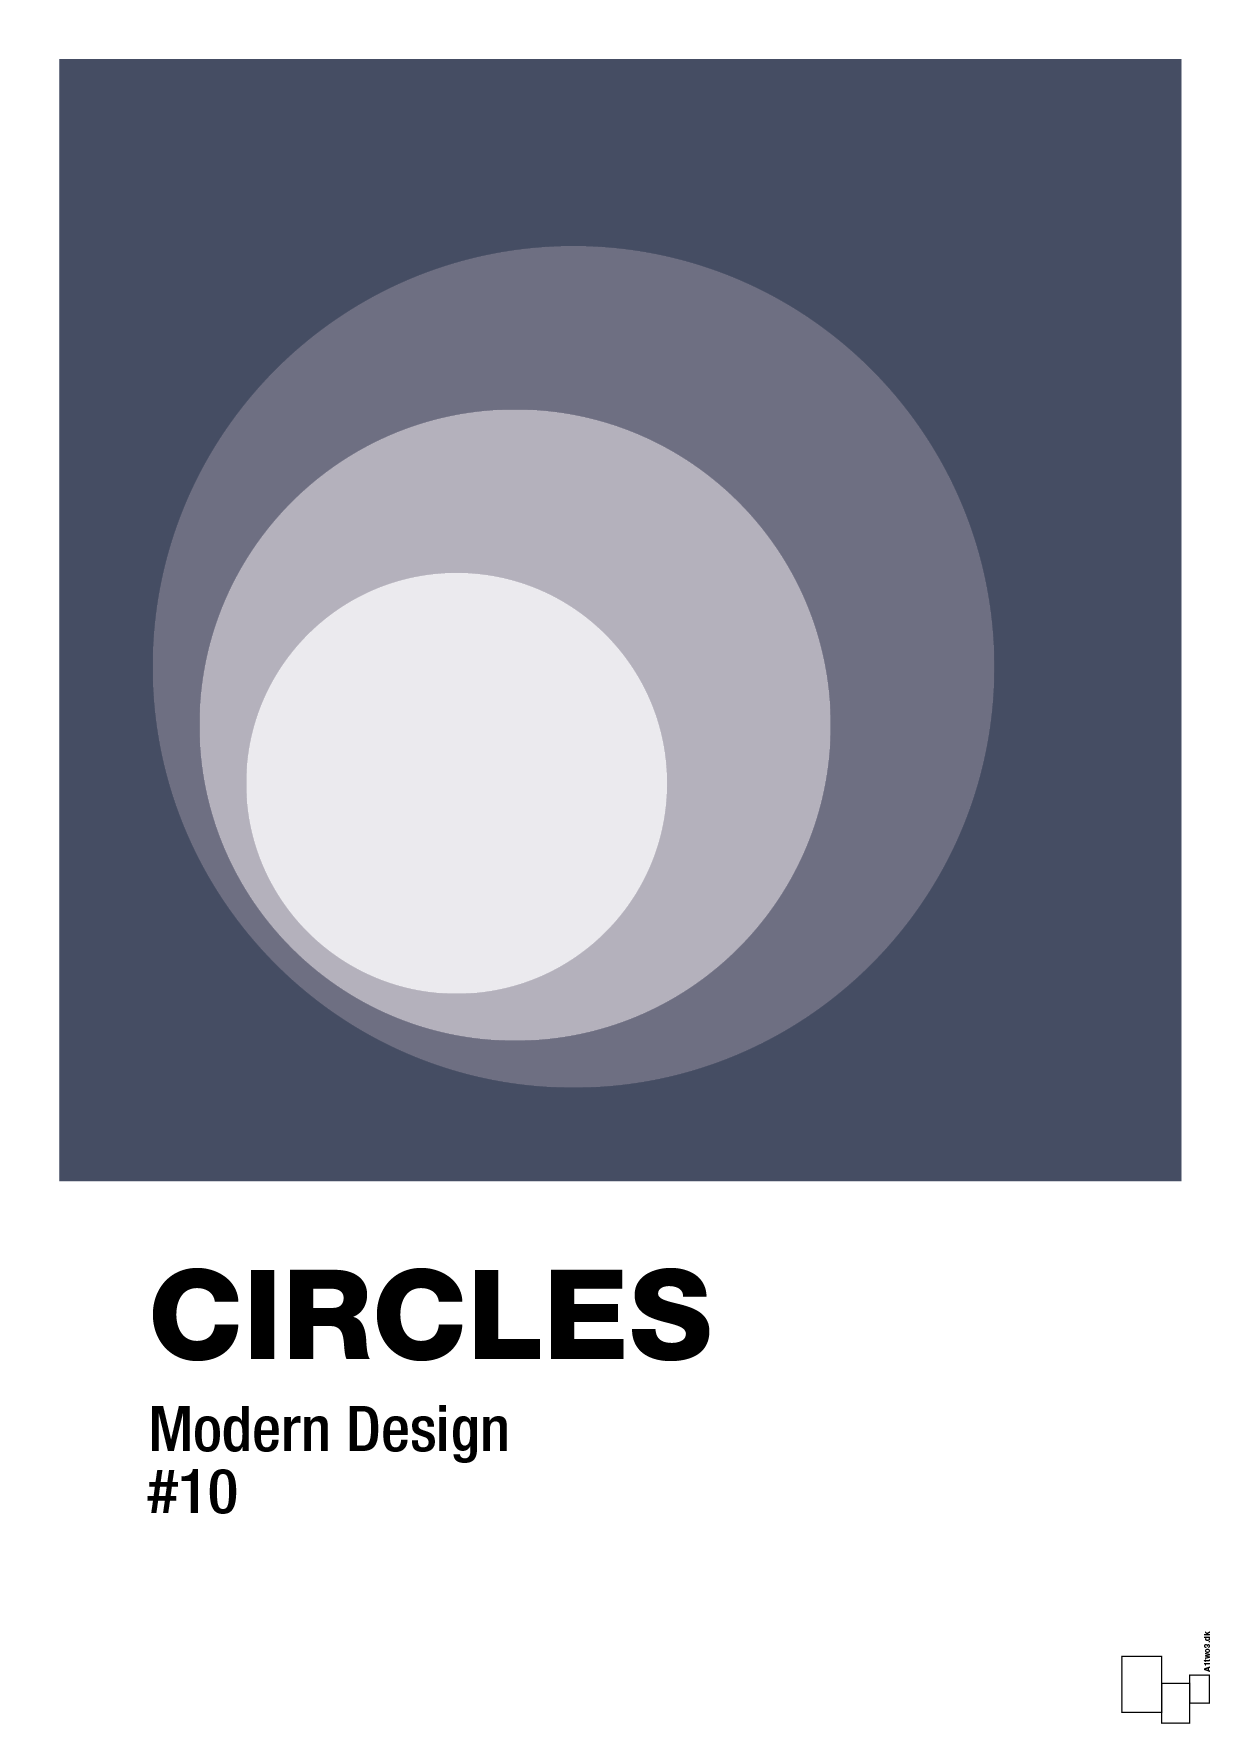 circles #10 - Plakat med Grafik i Petrol